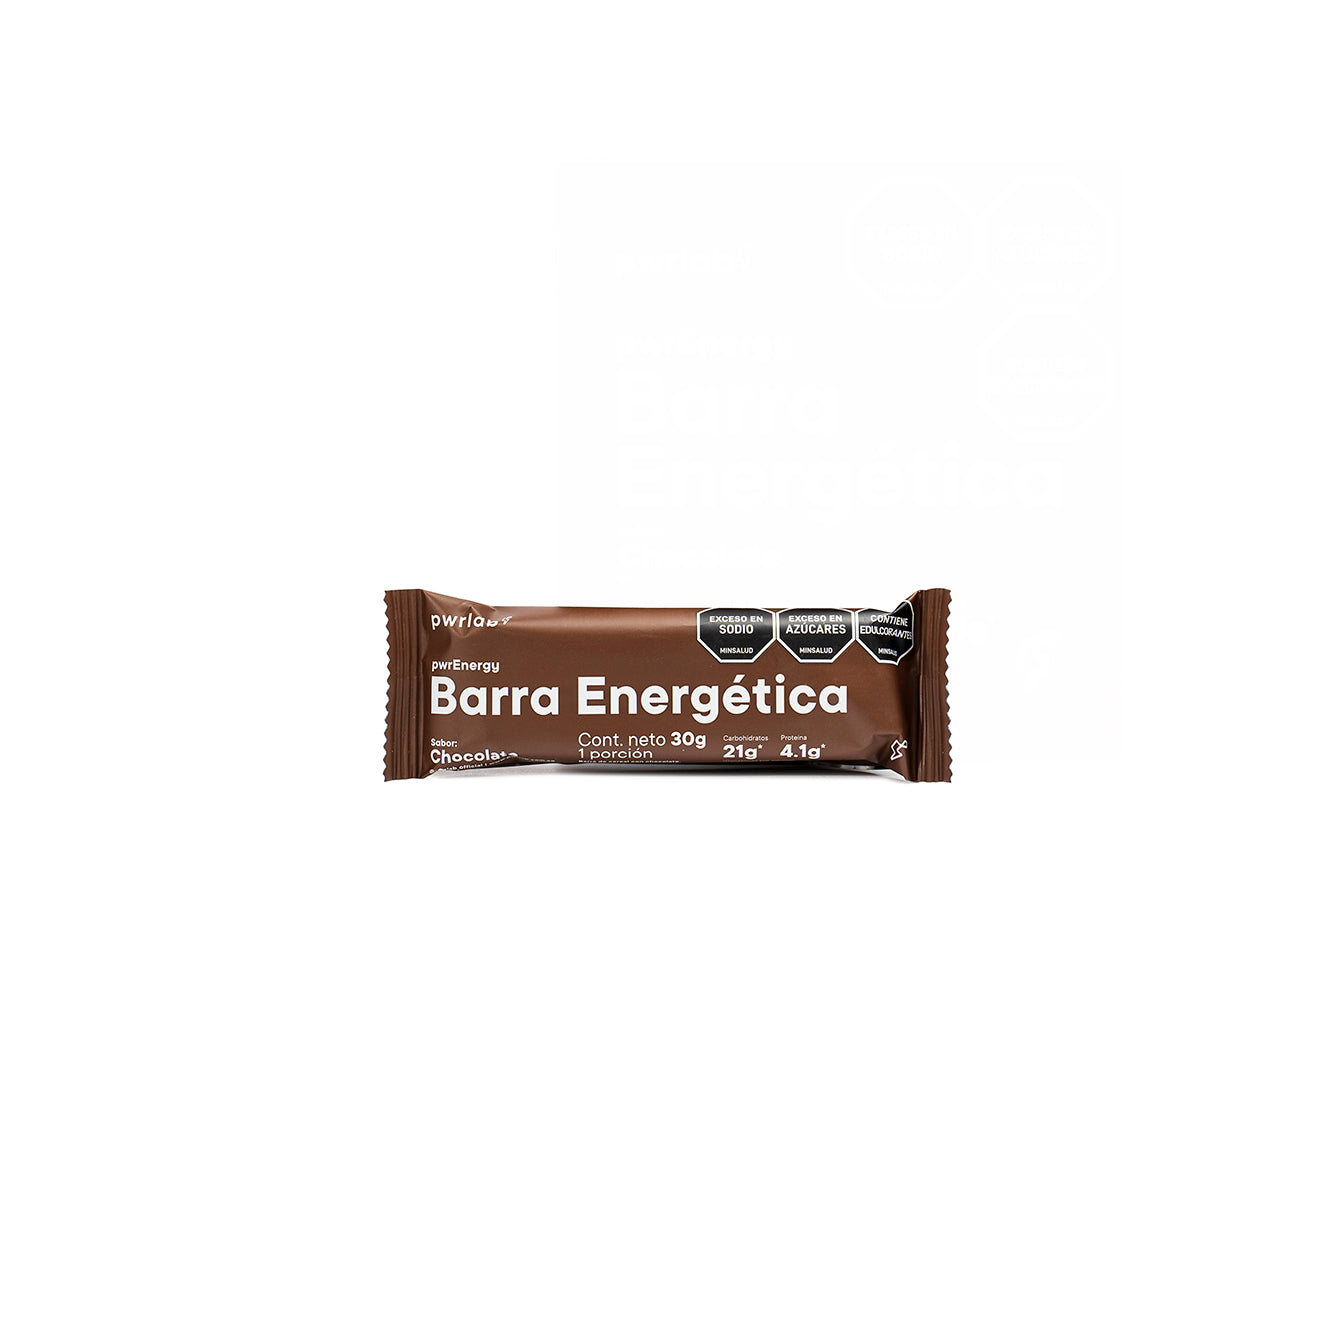 Barra Energética - pwrEnergy